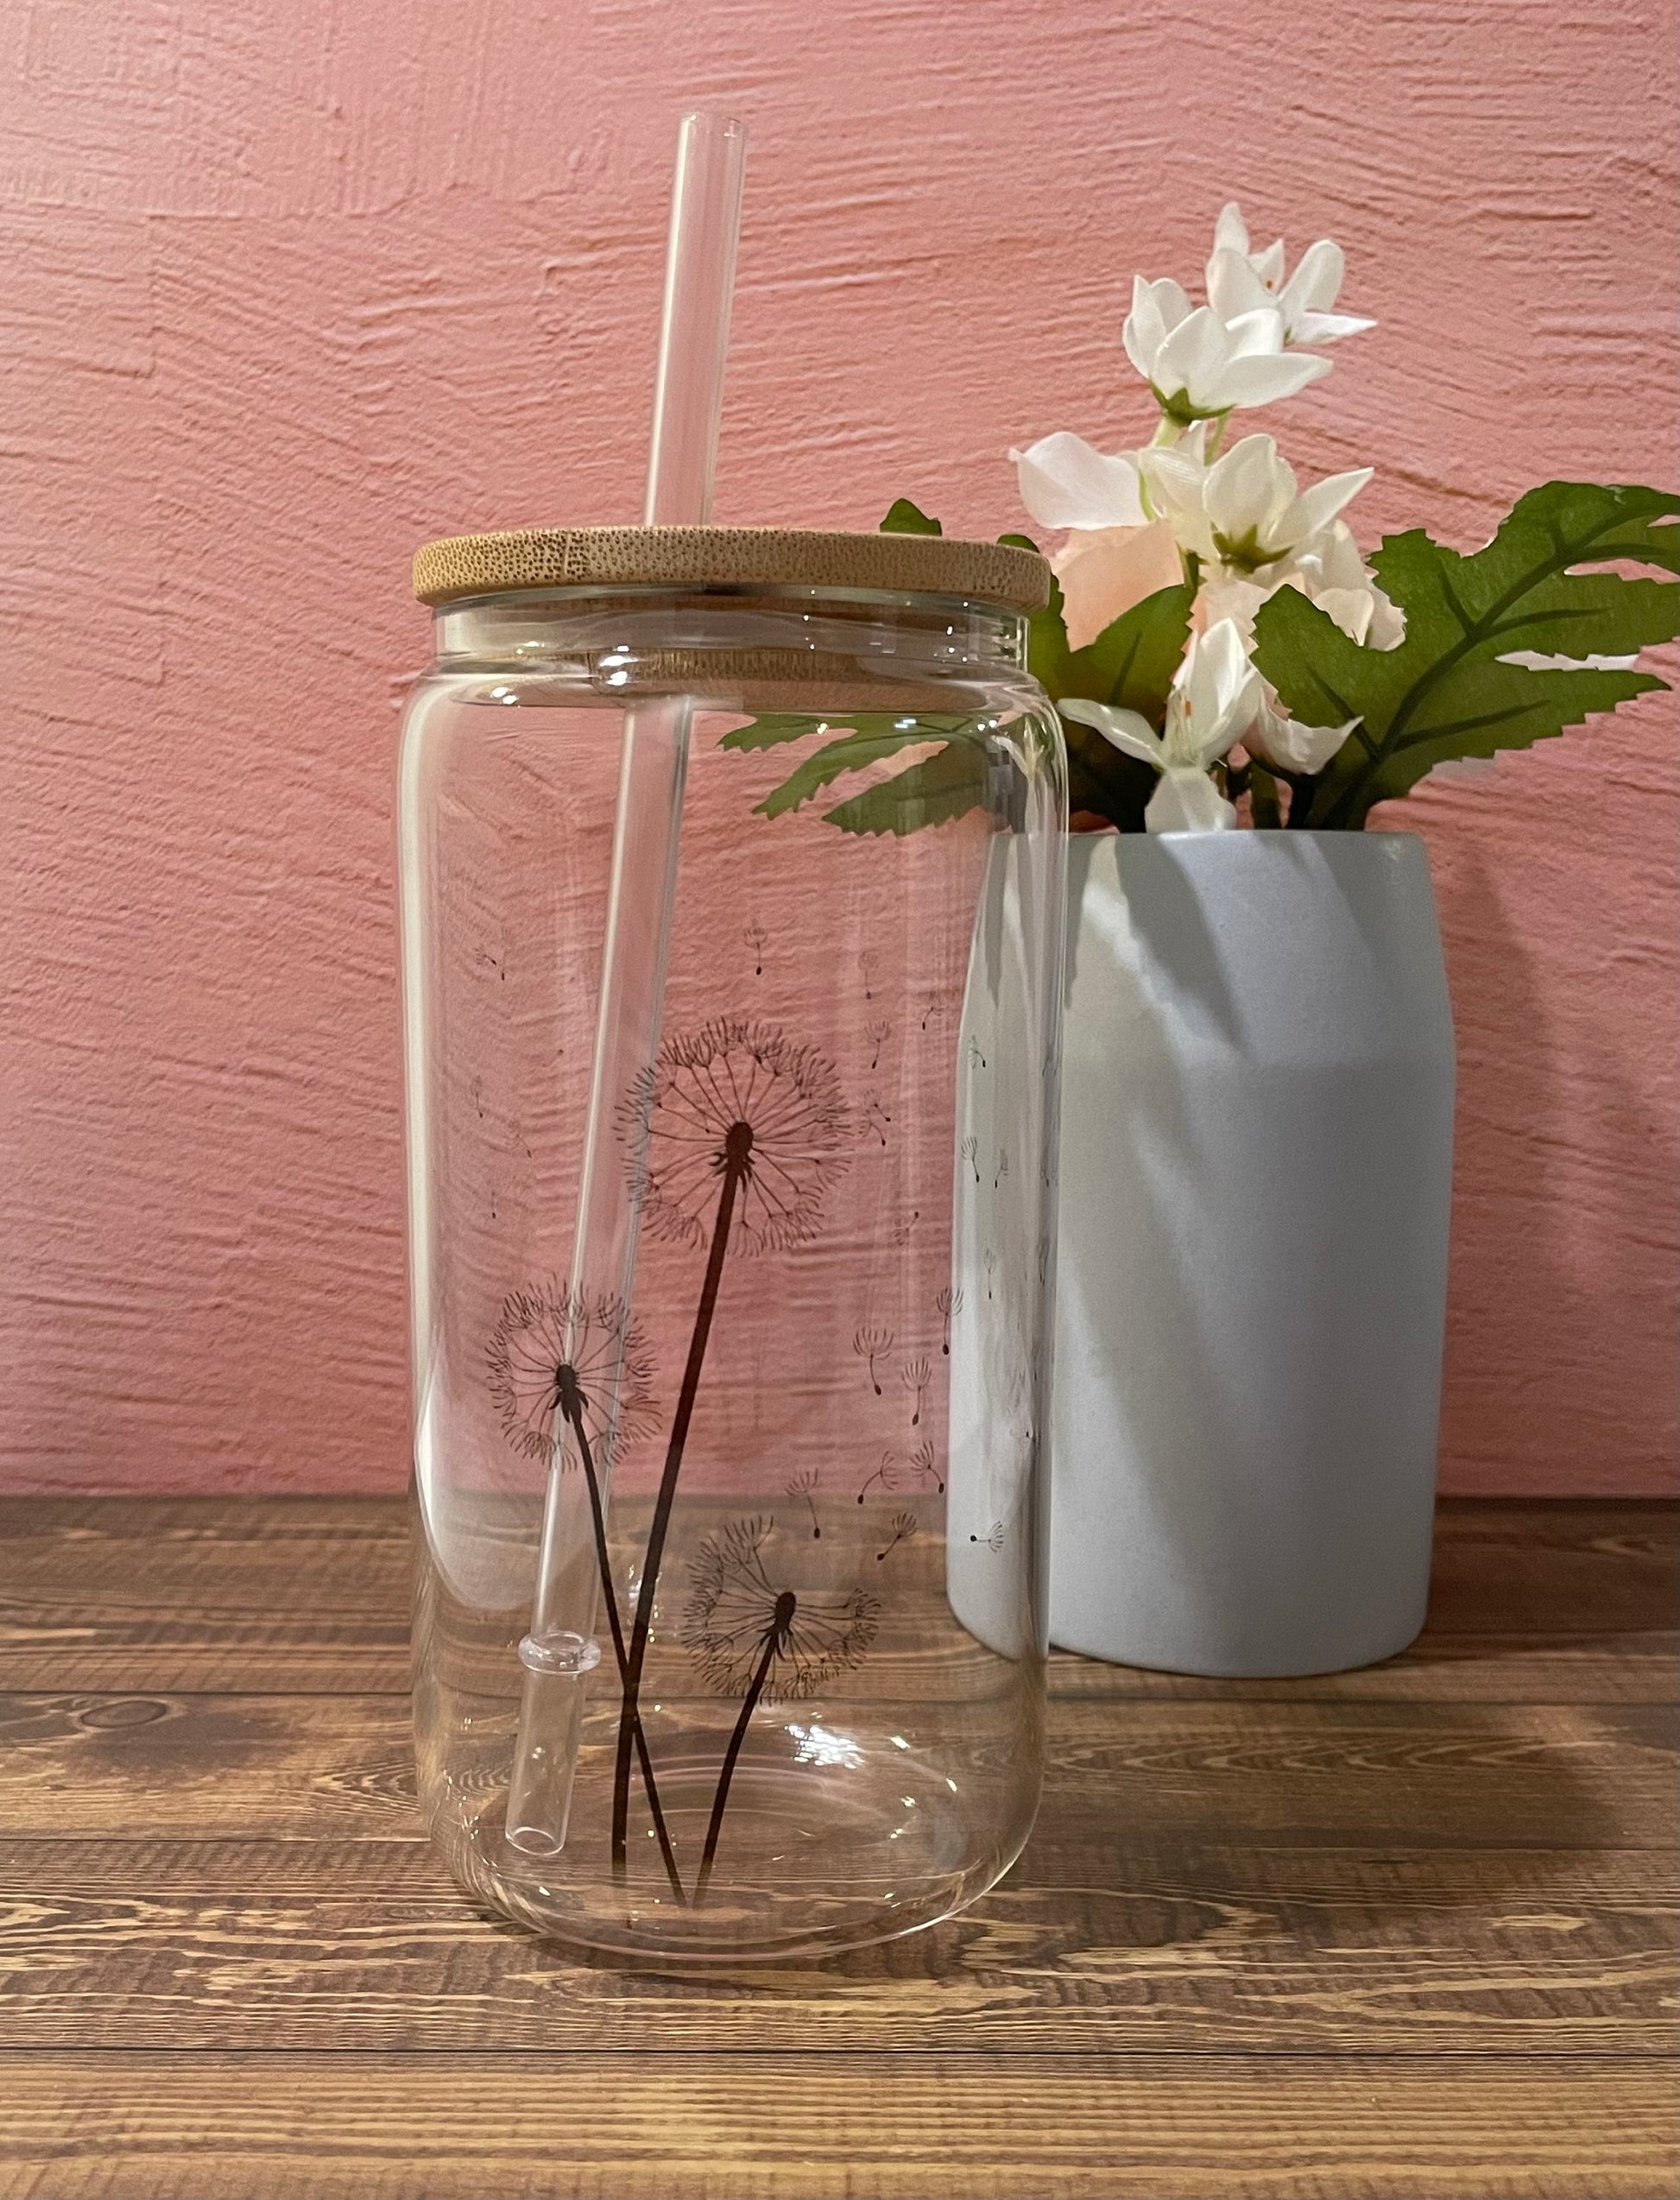 Flower Iced Coffee Glass, Mason Jar Glass, Iced Coffee Glass